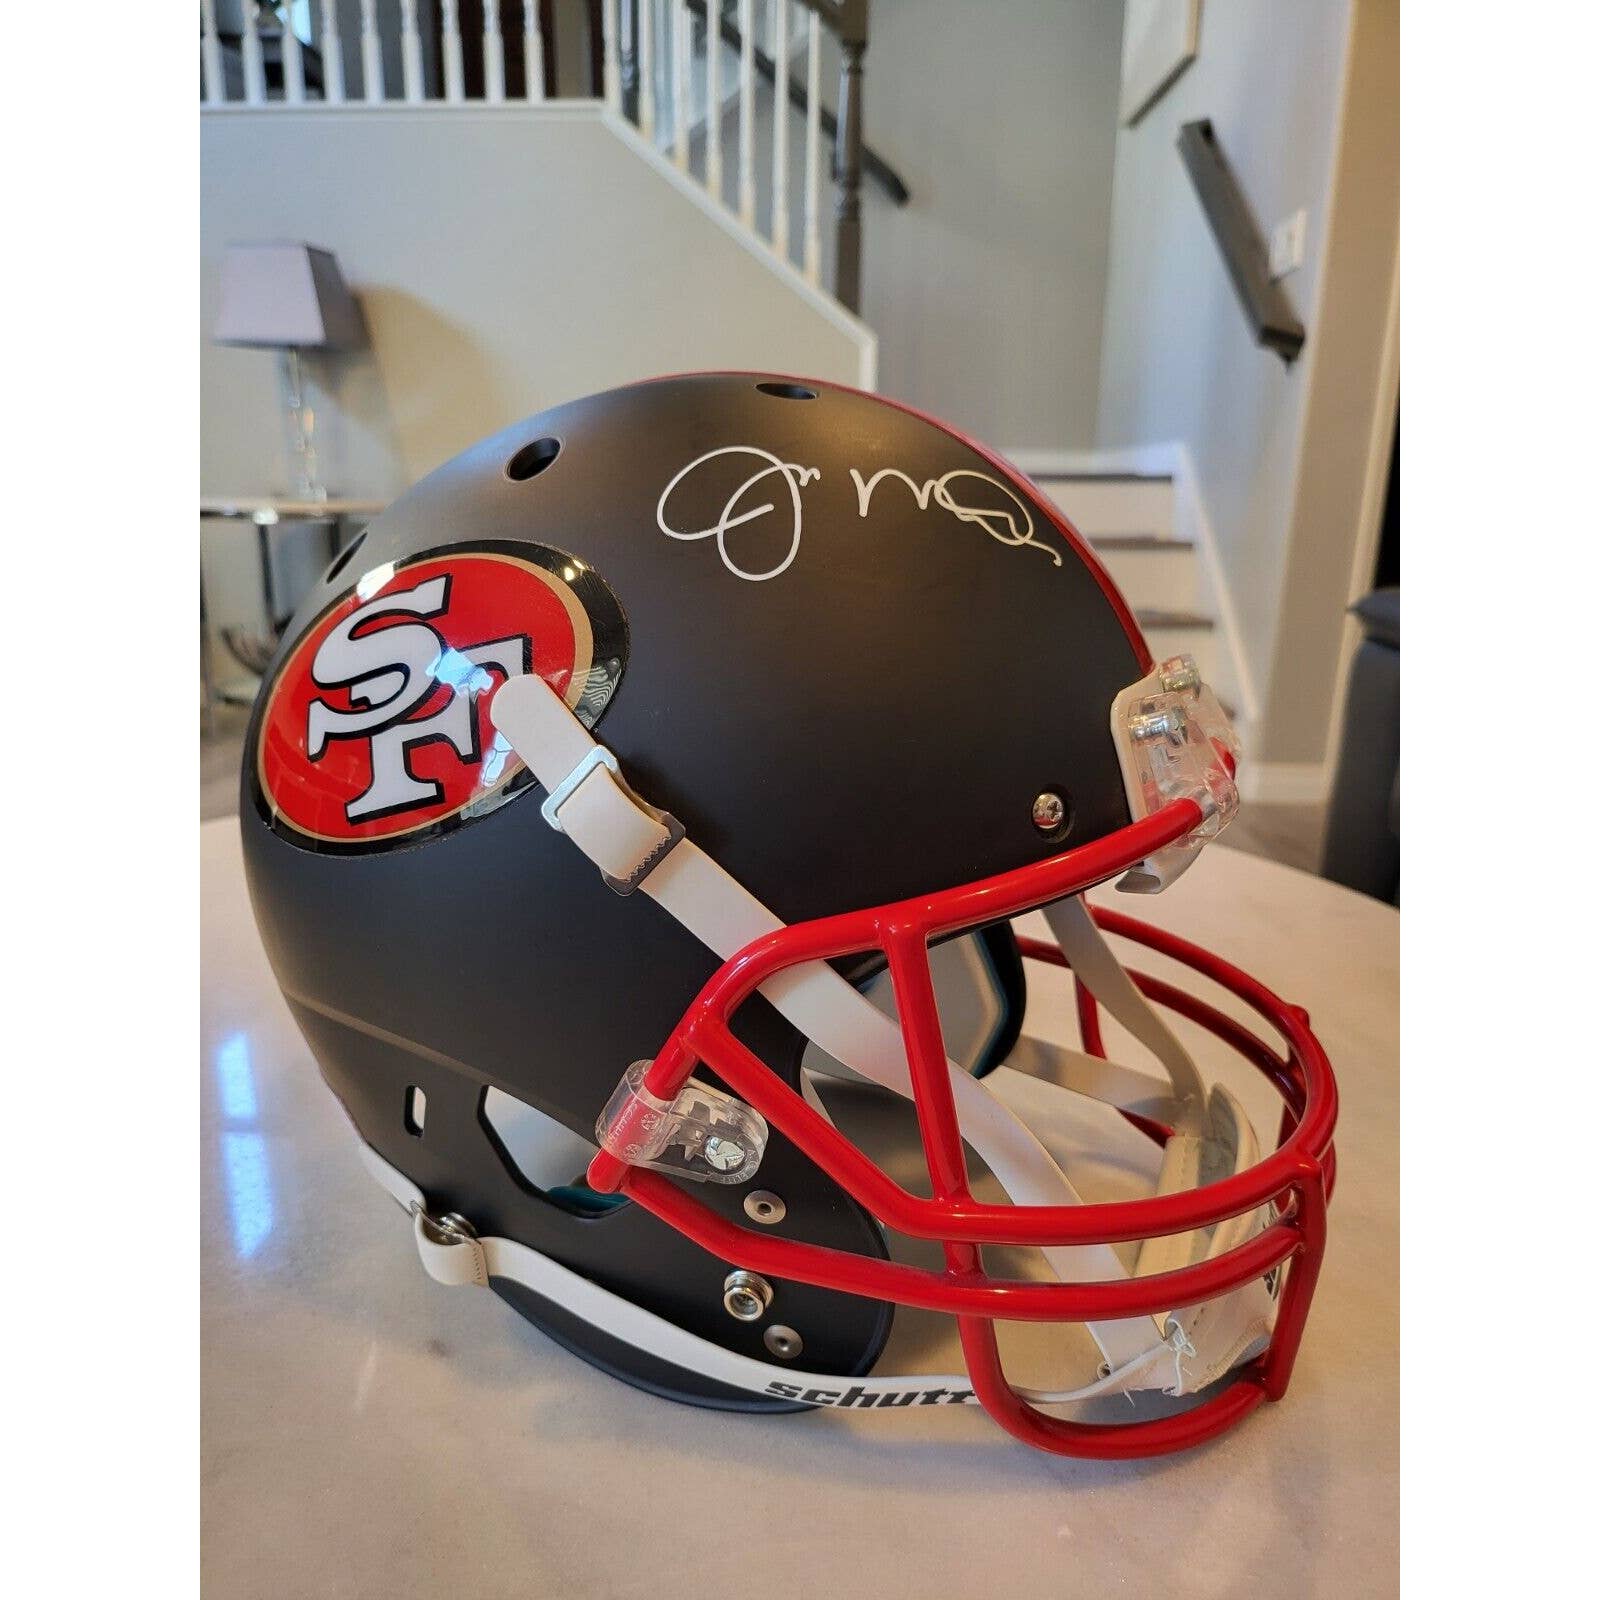 Joe Montana Autographed/Signed Full Size Helmet JSA San Francisco 49ers HOF - TreasuresEvolved